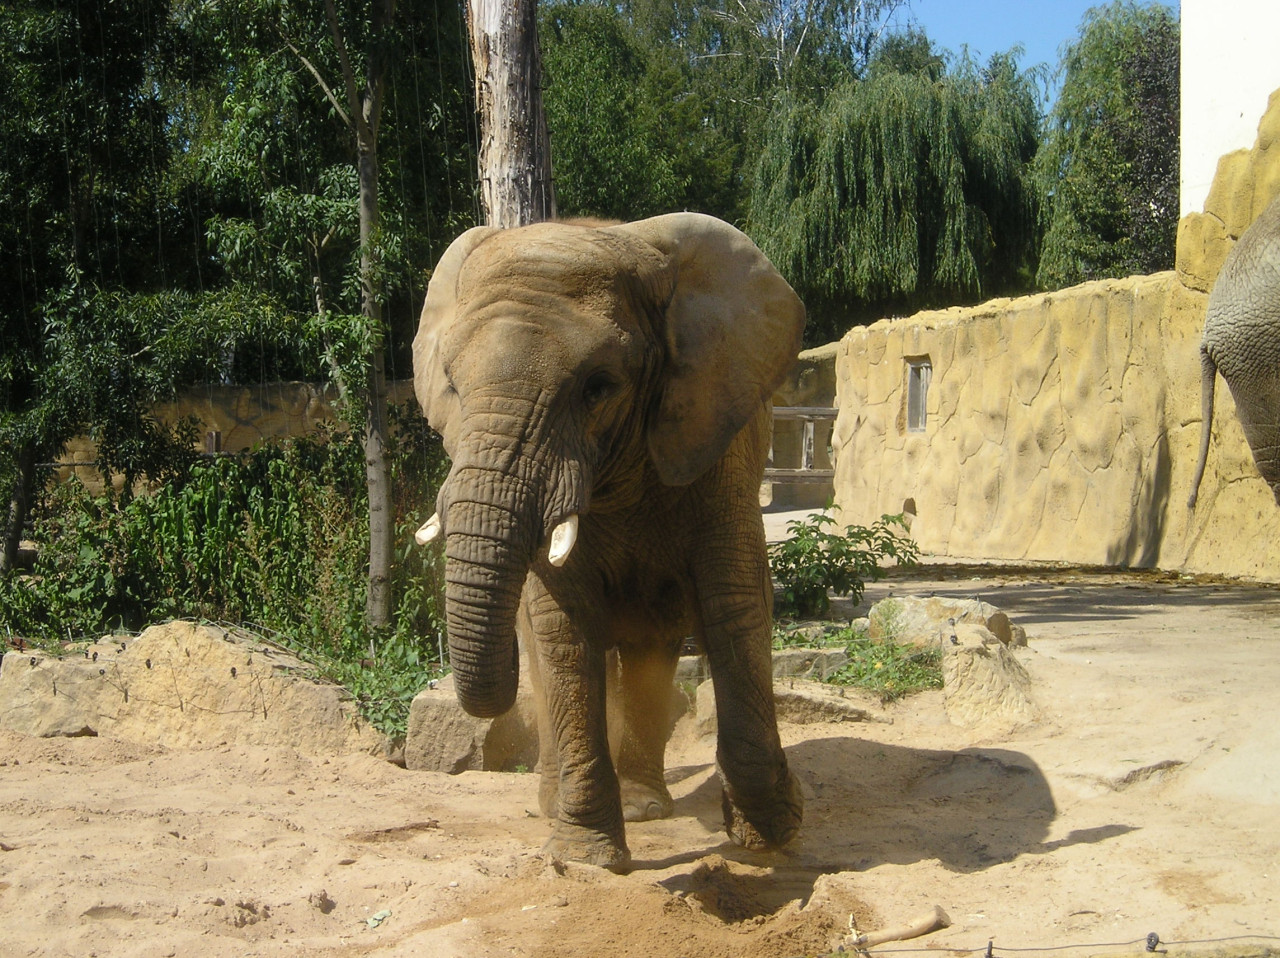 Tapeta slon_zoo